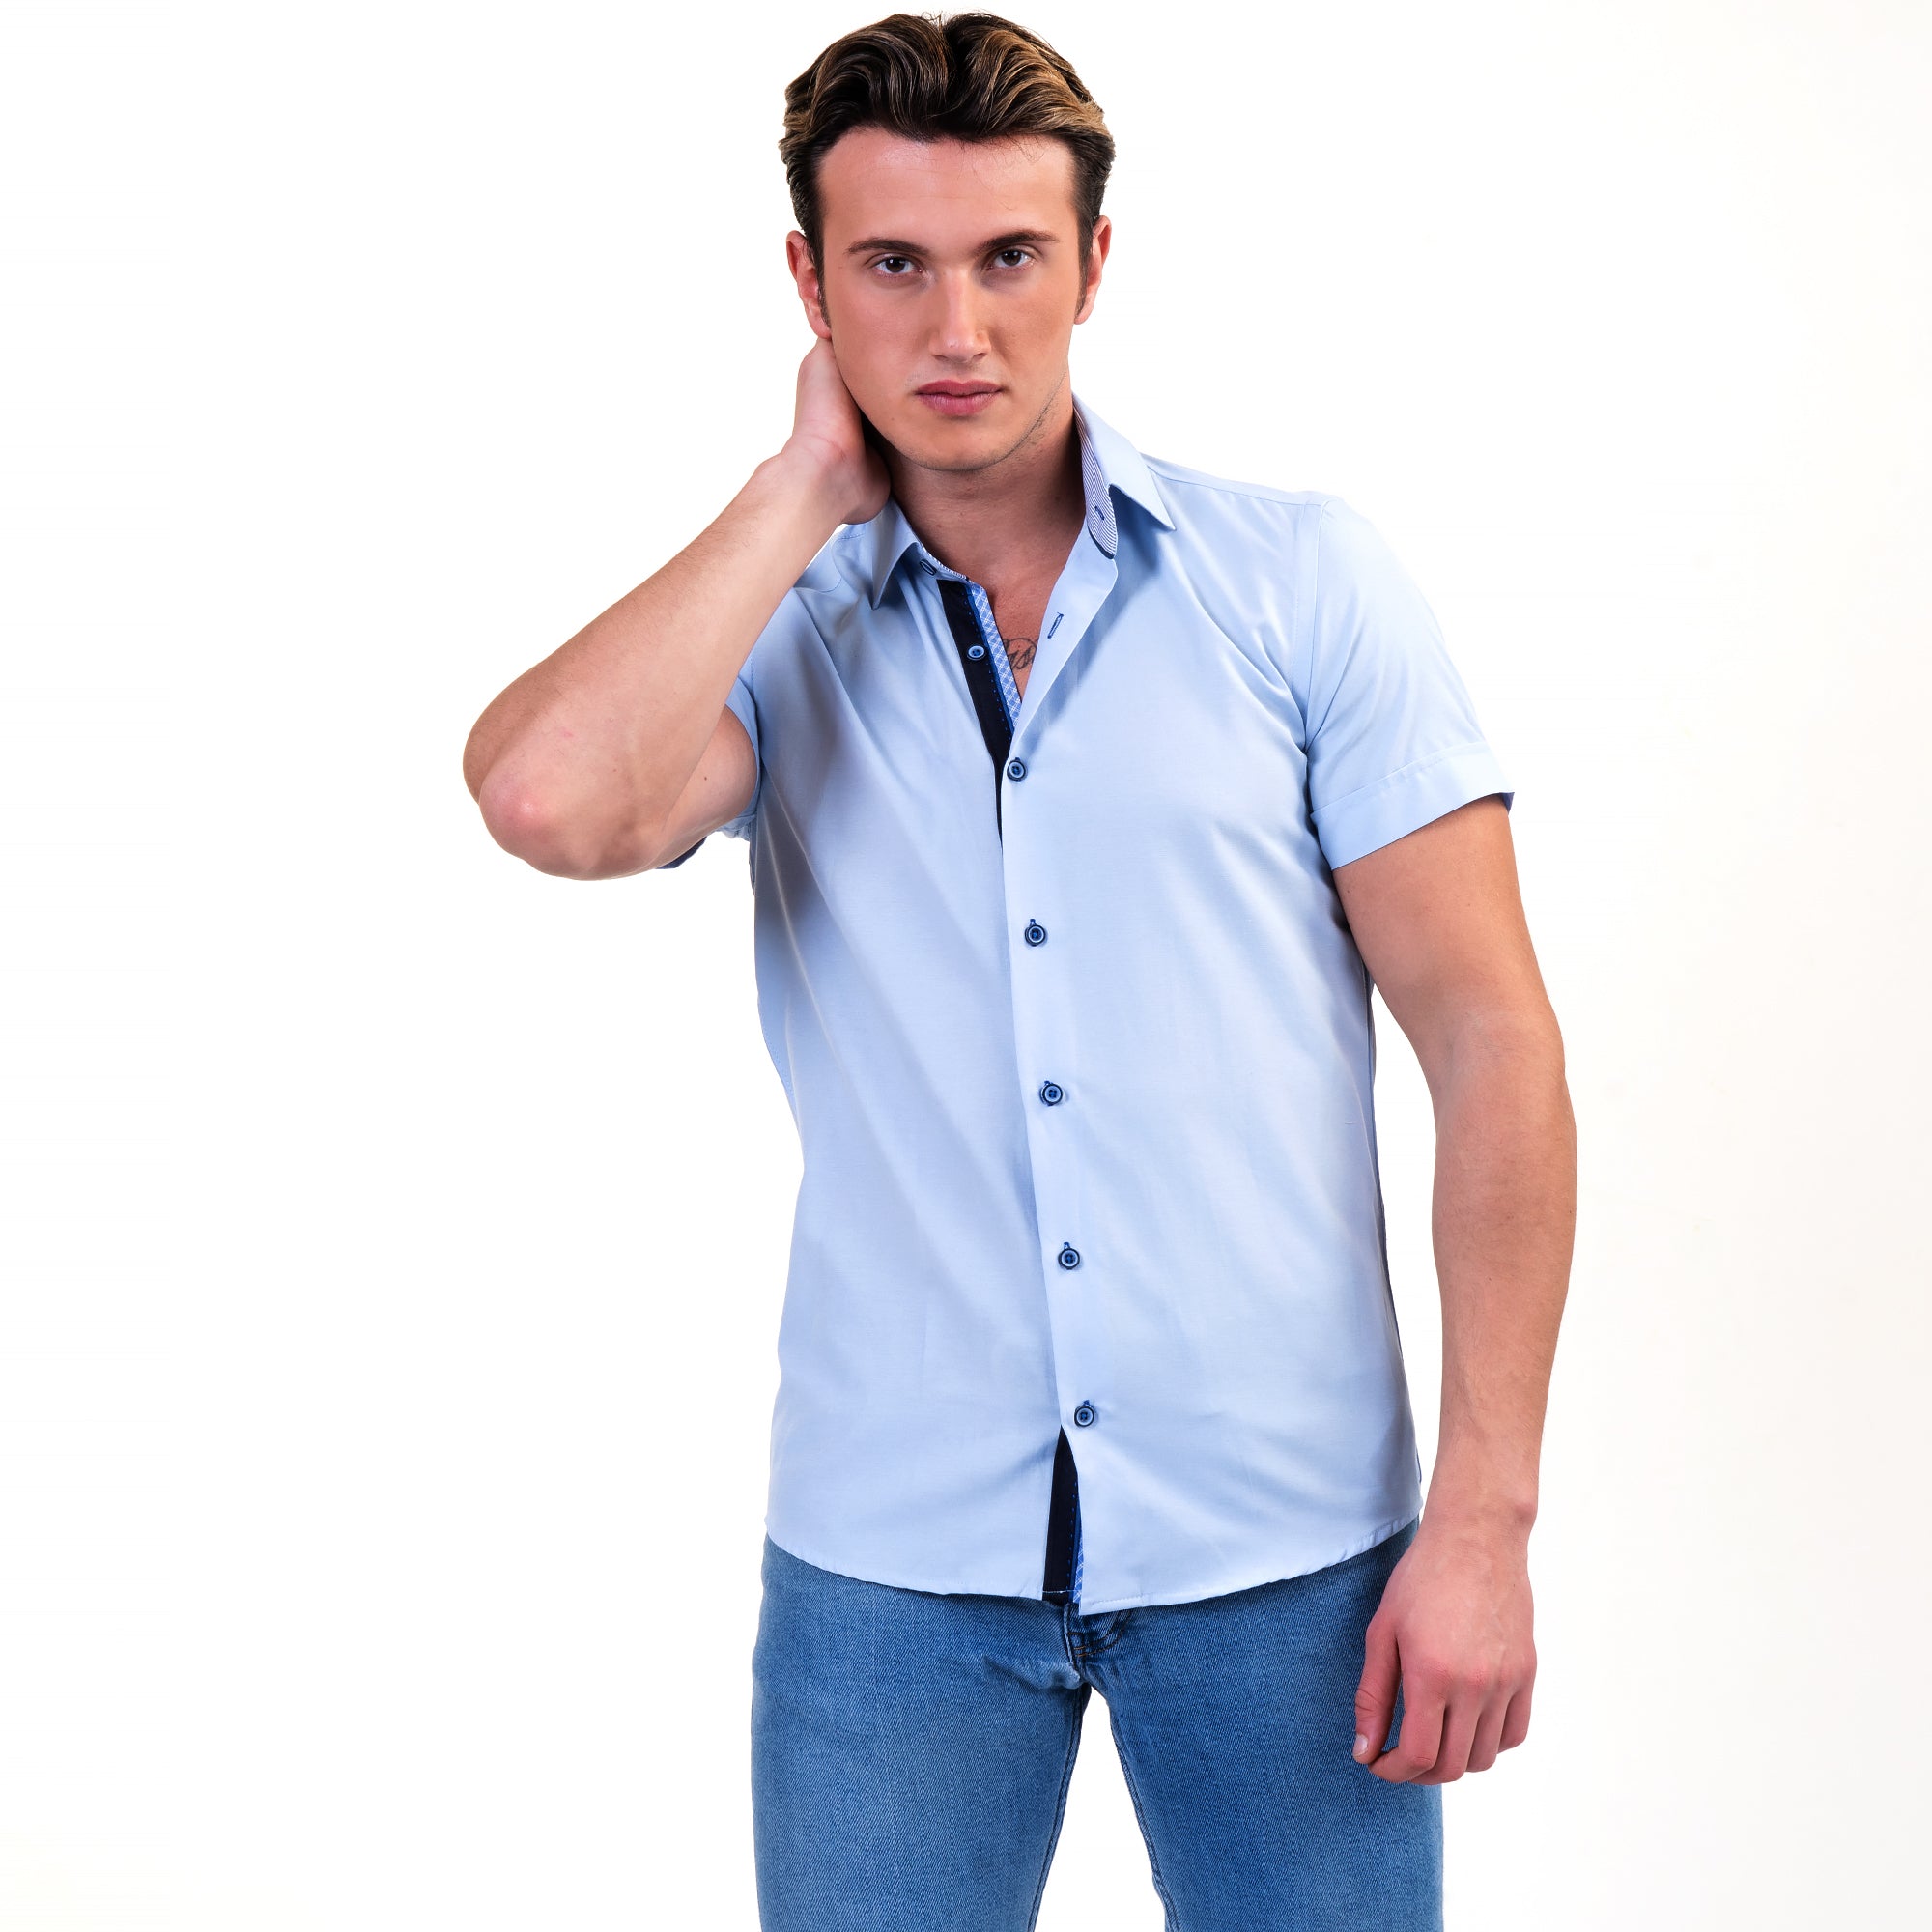 Soft Light Blue Mens Short Sleeve Button up Shirts - Tailored Slim Fit Cotton Dress Shirts